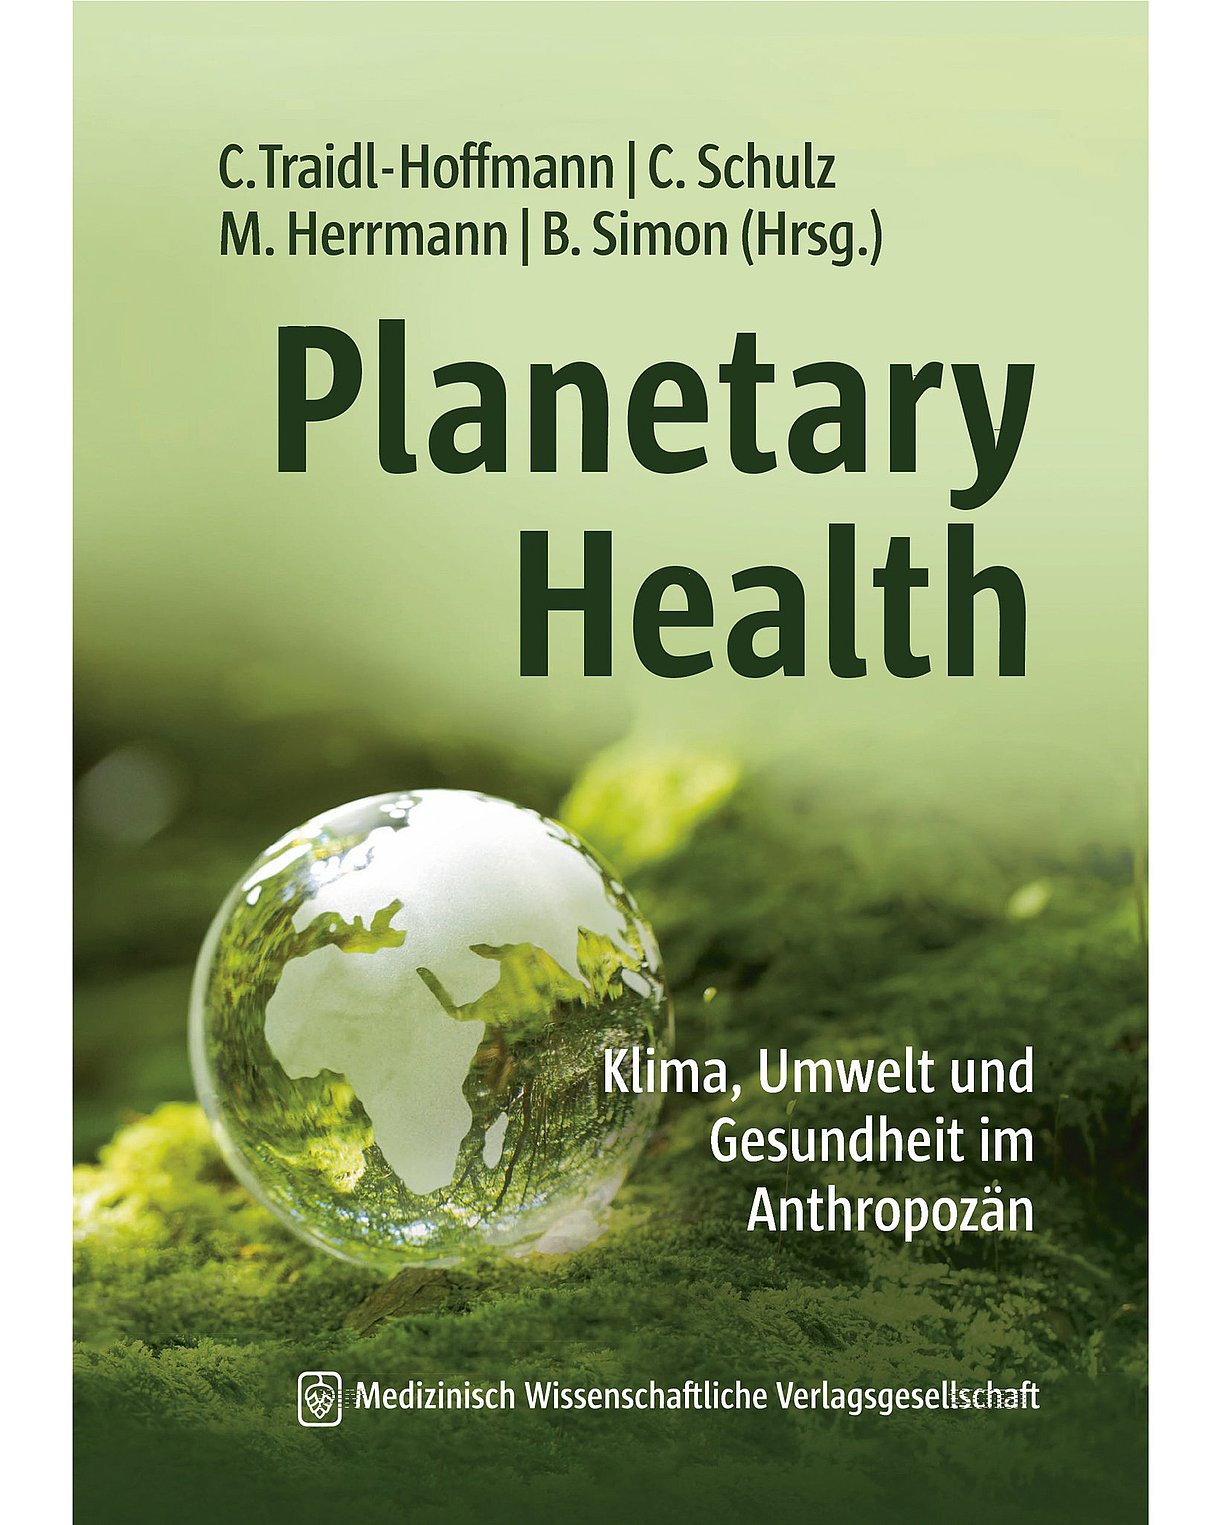 Foto: Buchcover des Buches: Claudia Traidl-Hoffmann, Christian Schulz et al. (Hrsg.): Planetary Health. Berlin, Medizinisch Wissenschaftliche Verlagsgesellschaft, 2023